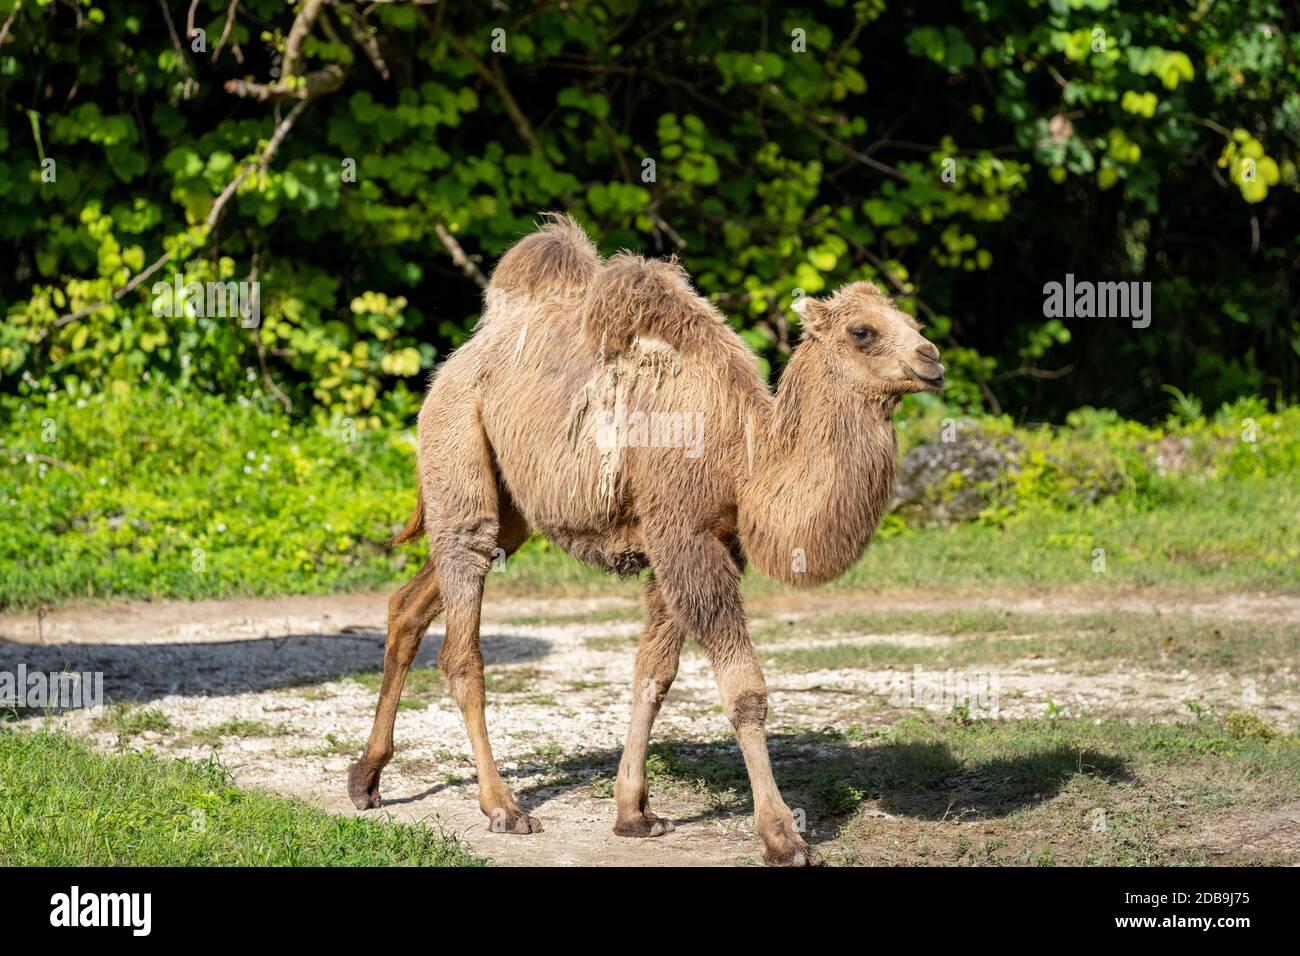 Camel Calve in motion wildlife photo Stock Photo